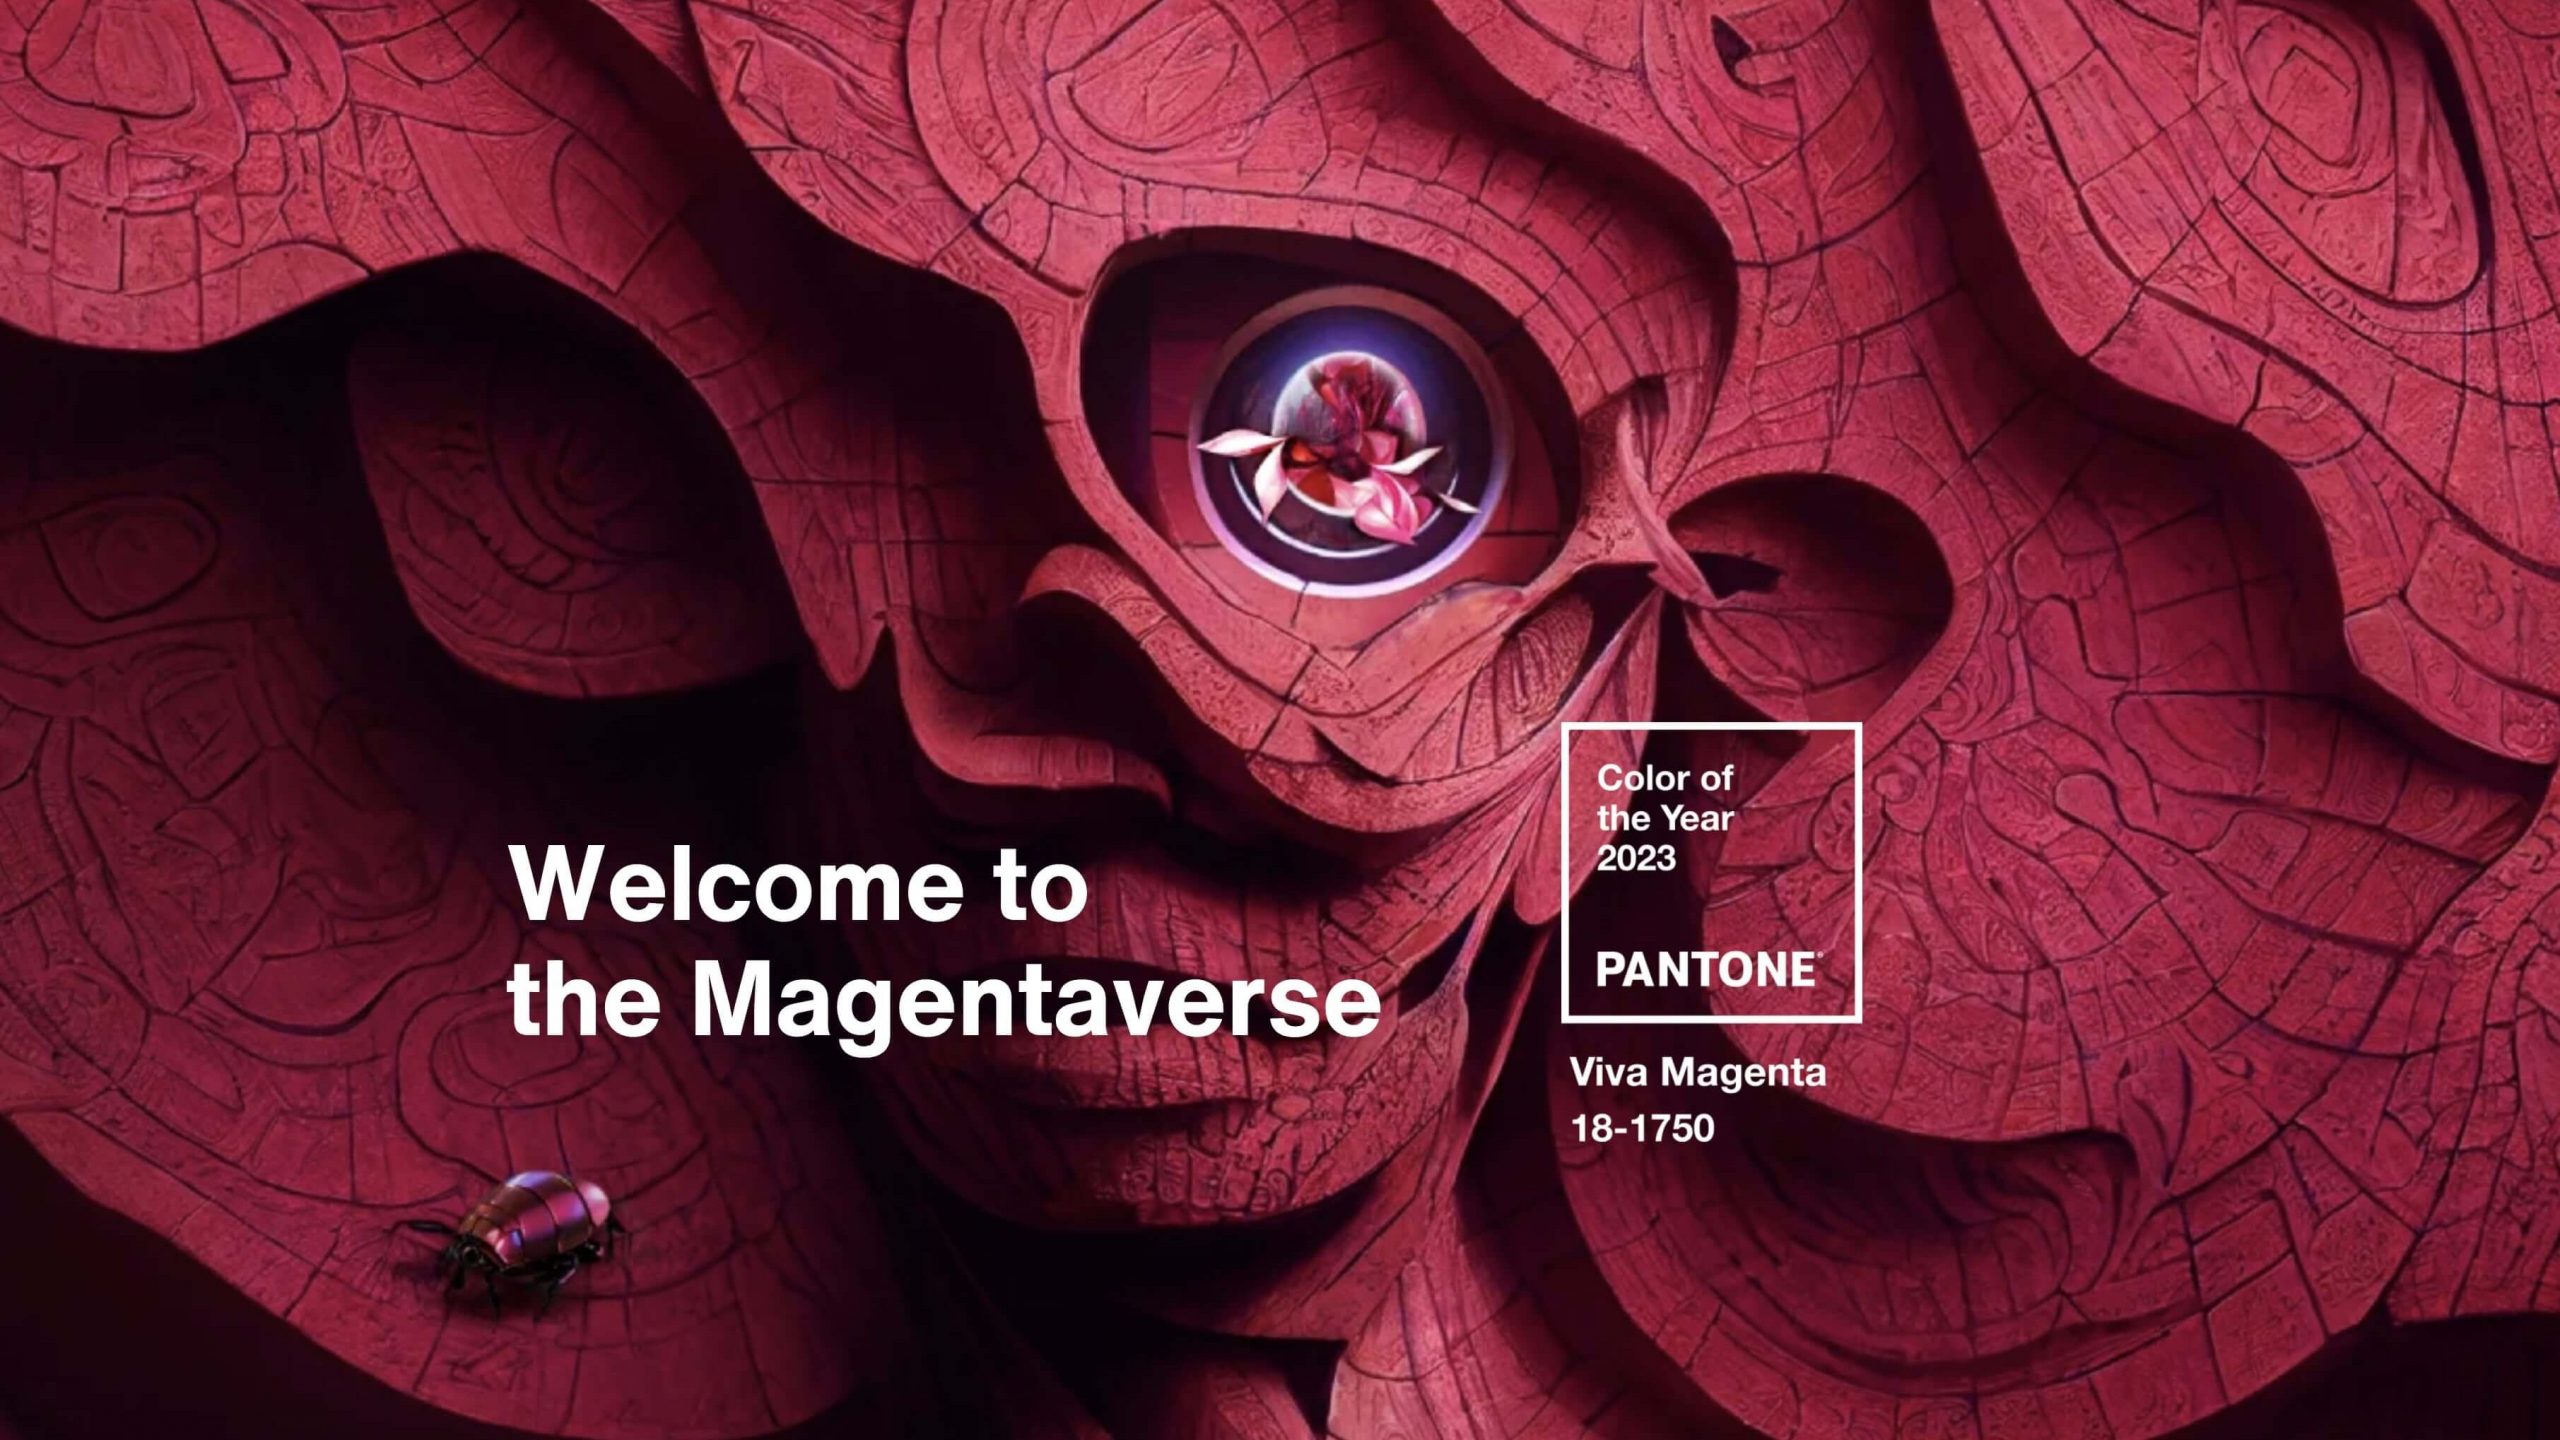 Viva Magenta - Pantone color of the year 2023
